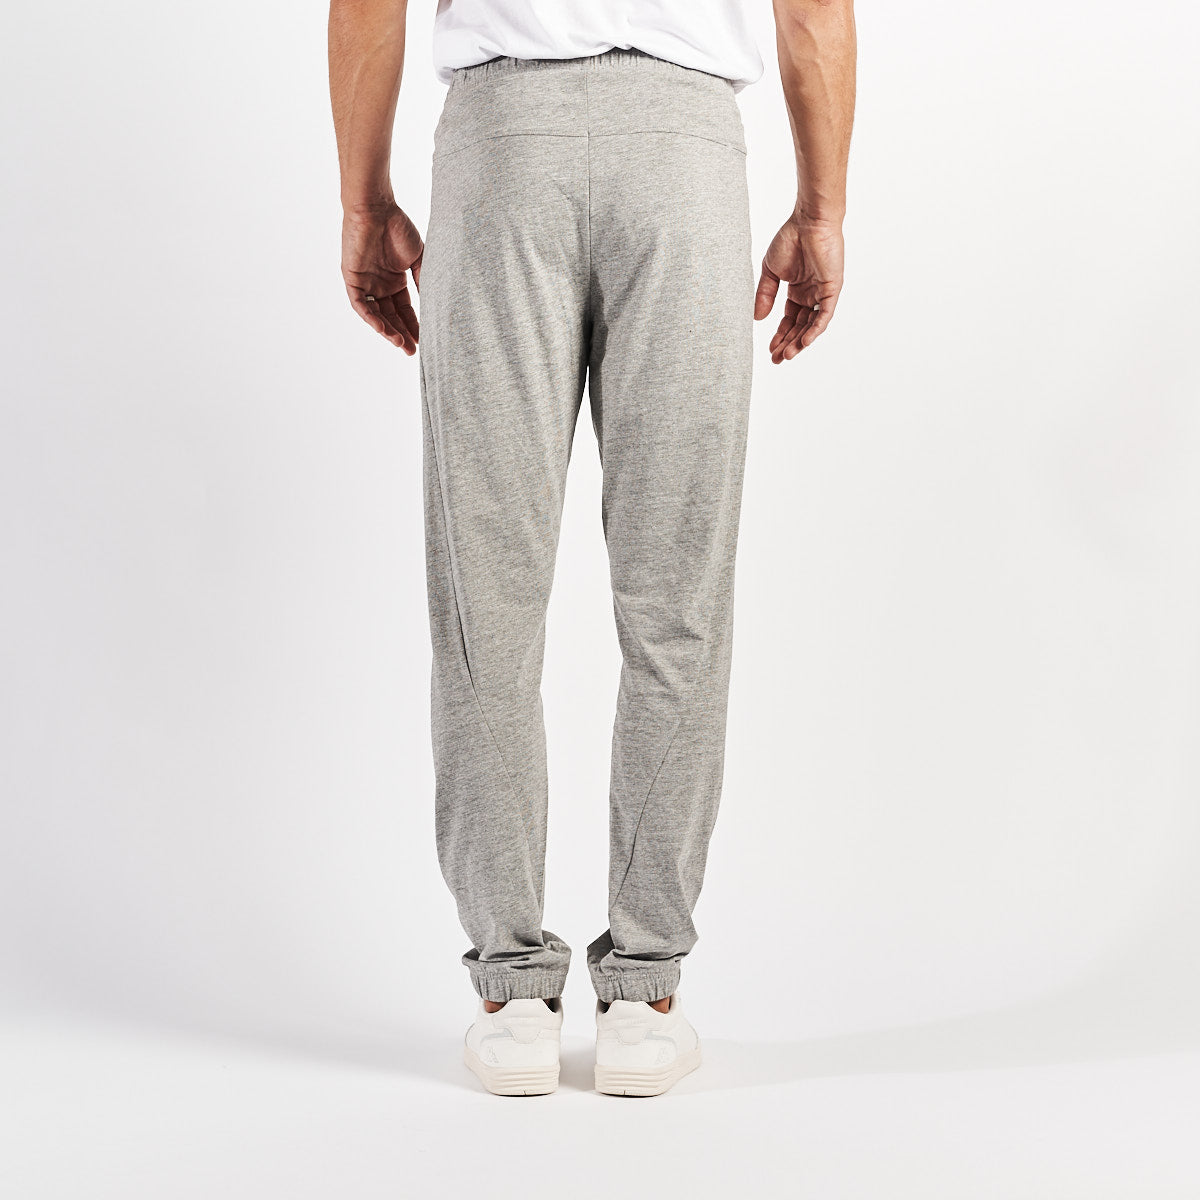 Pantalon Kolriky gris homme - Image 3